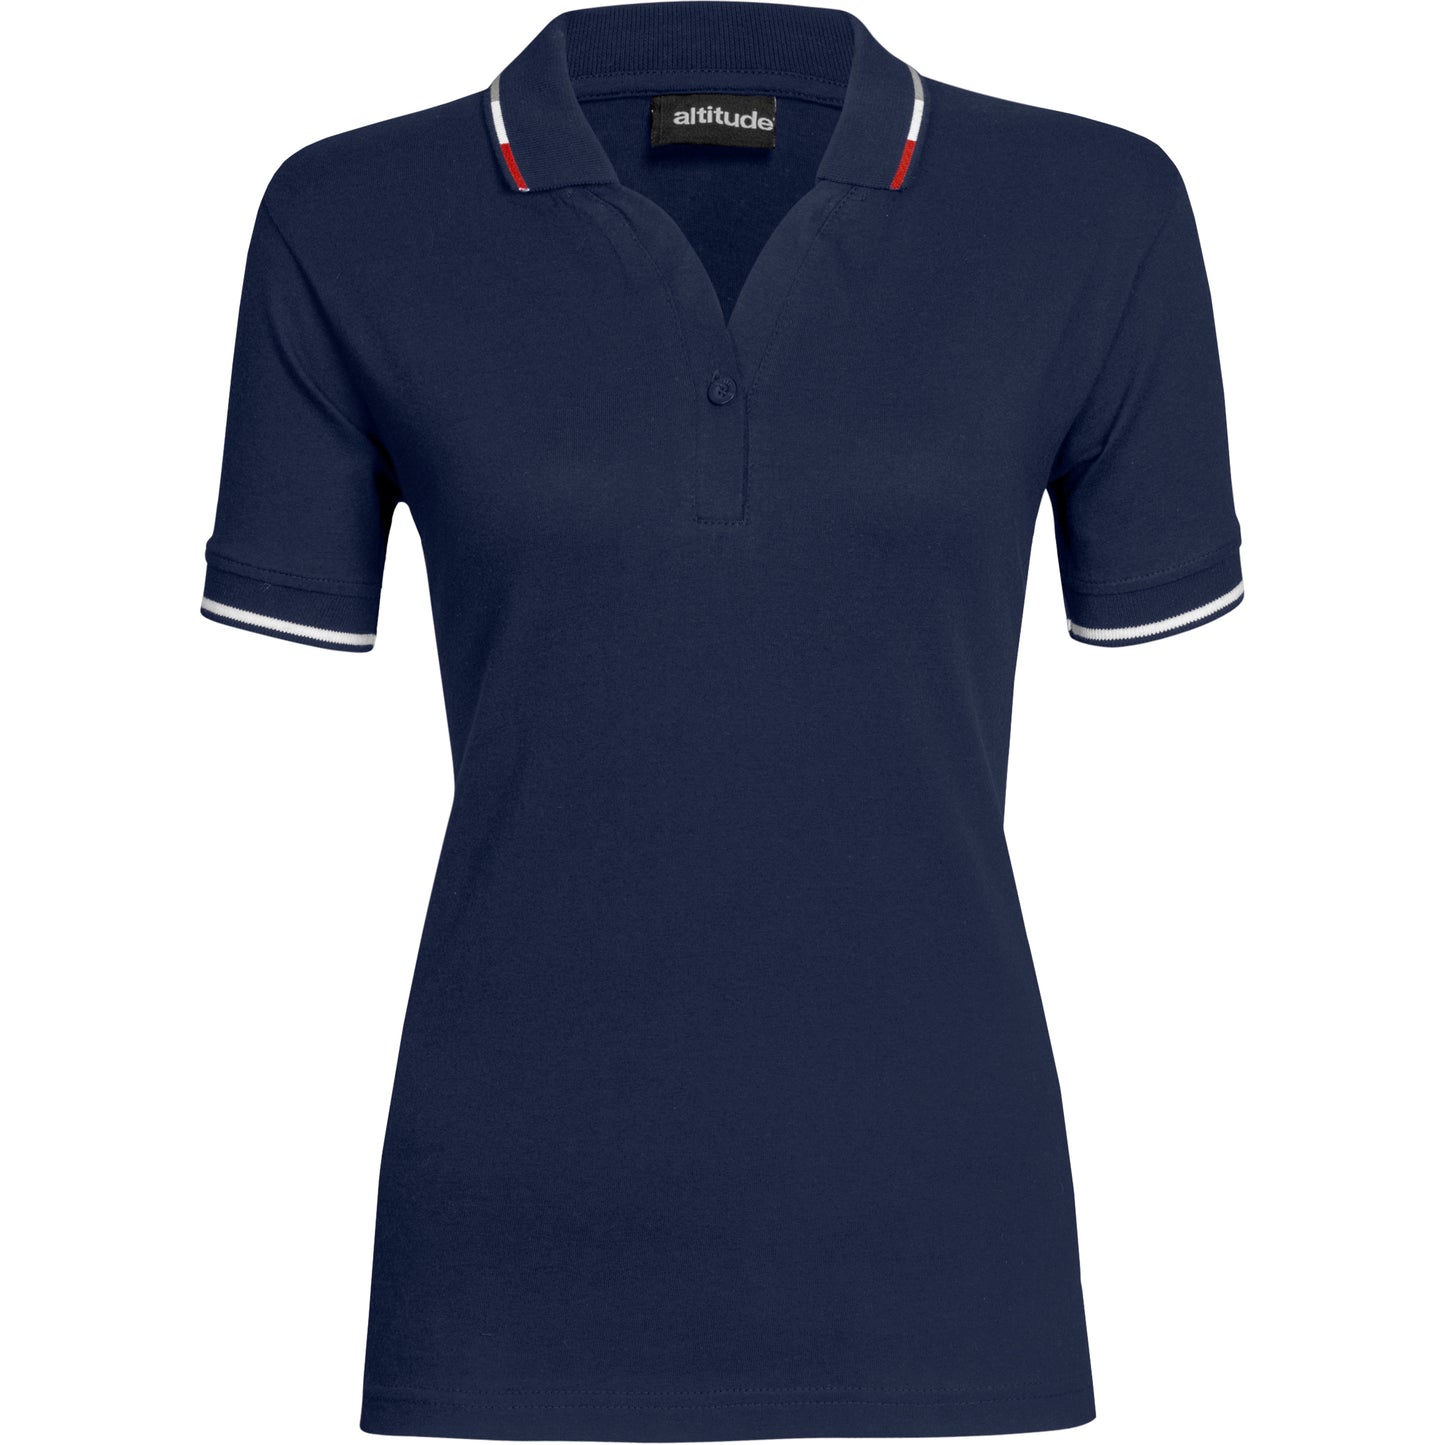 Ladies Ash Golf Shirt